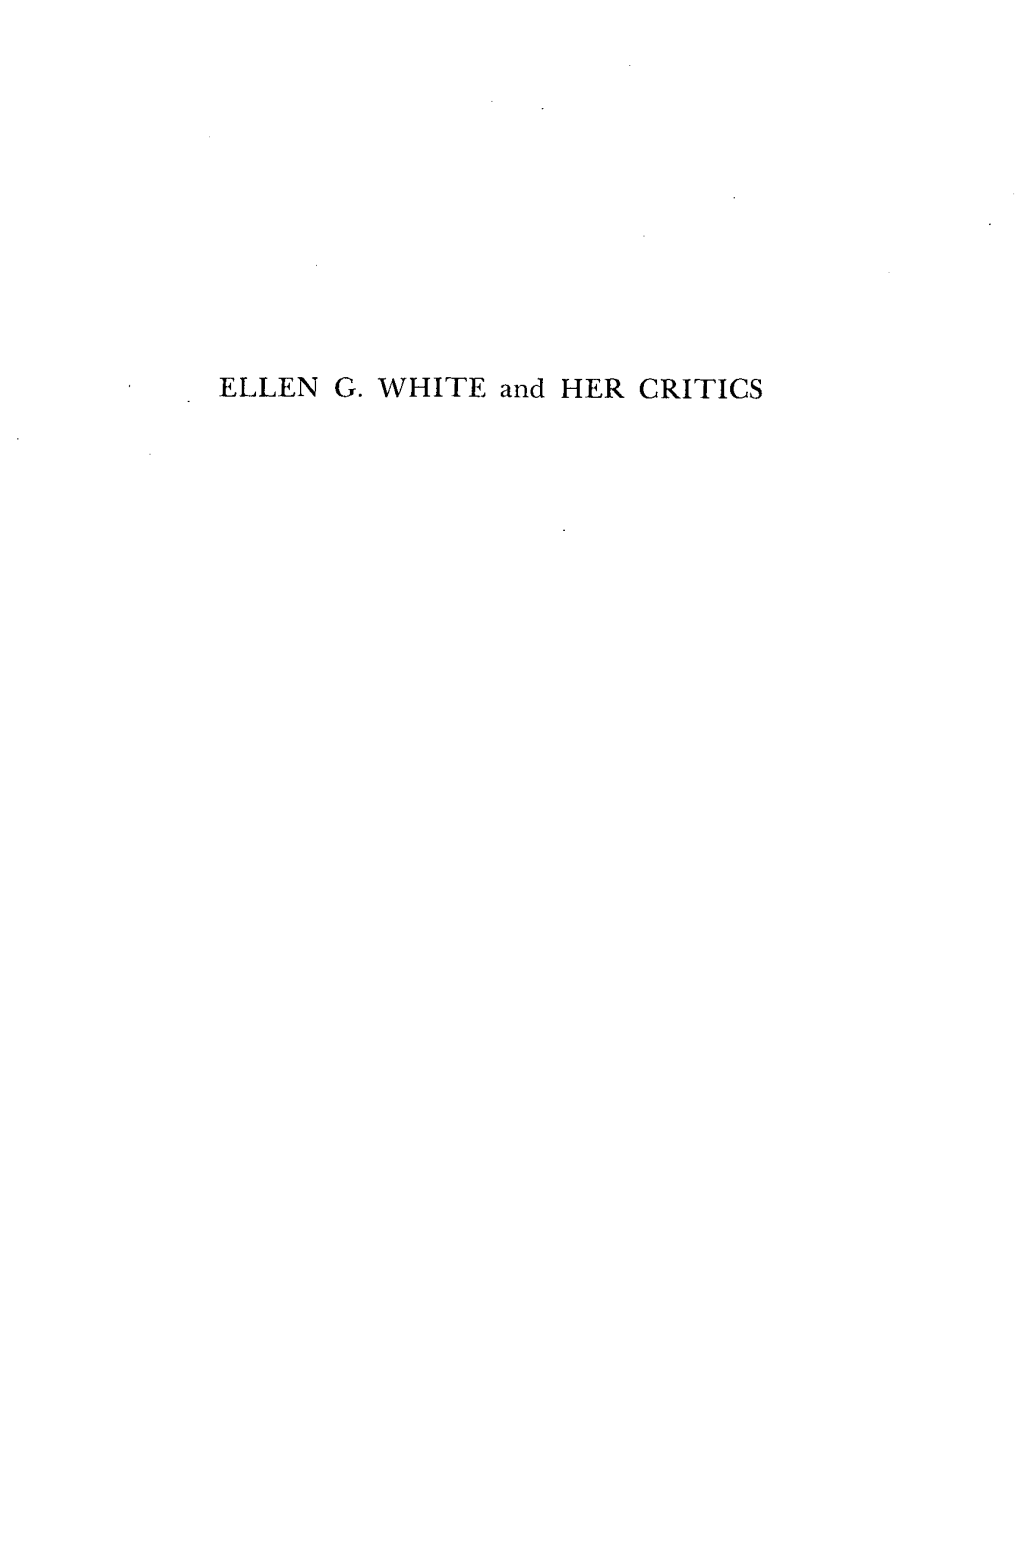 ELLEN G. WHITE and HER CRITICS Dedication